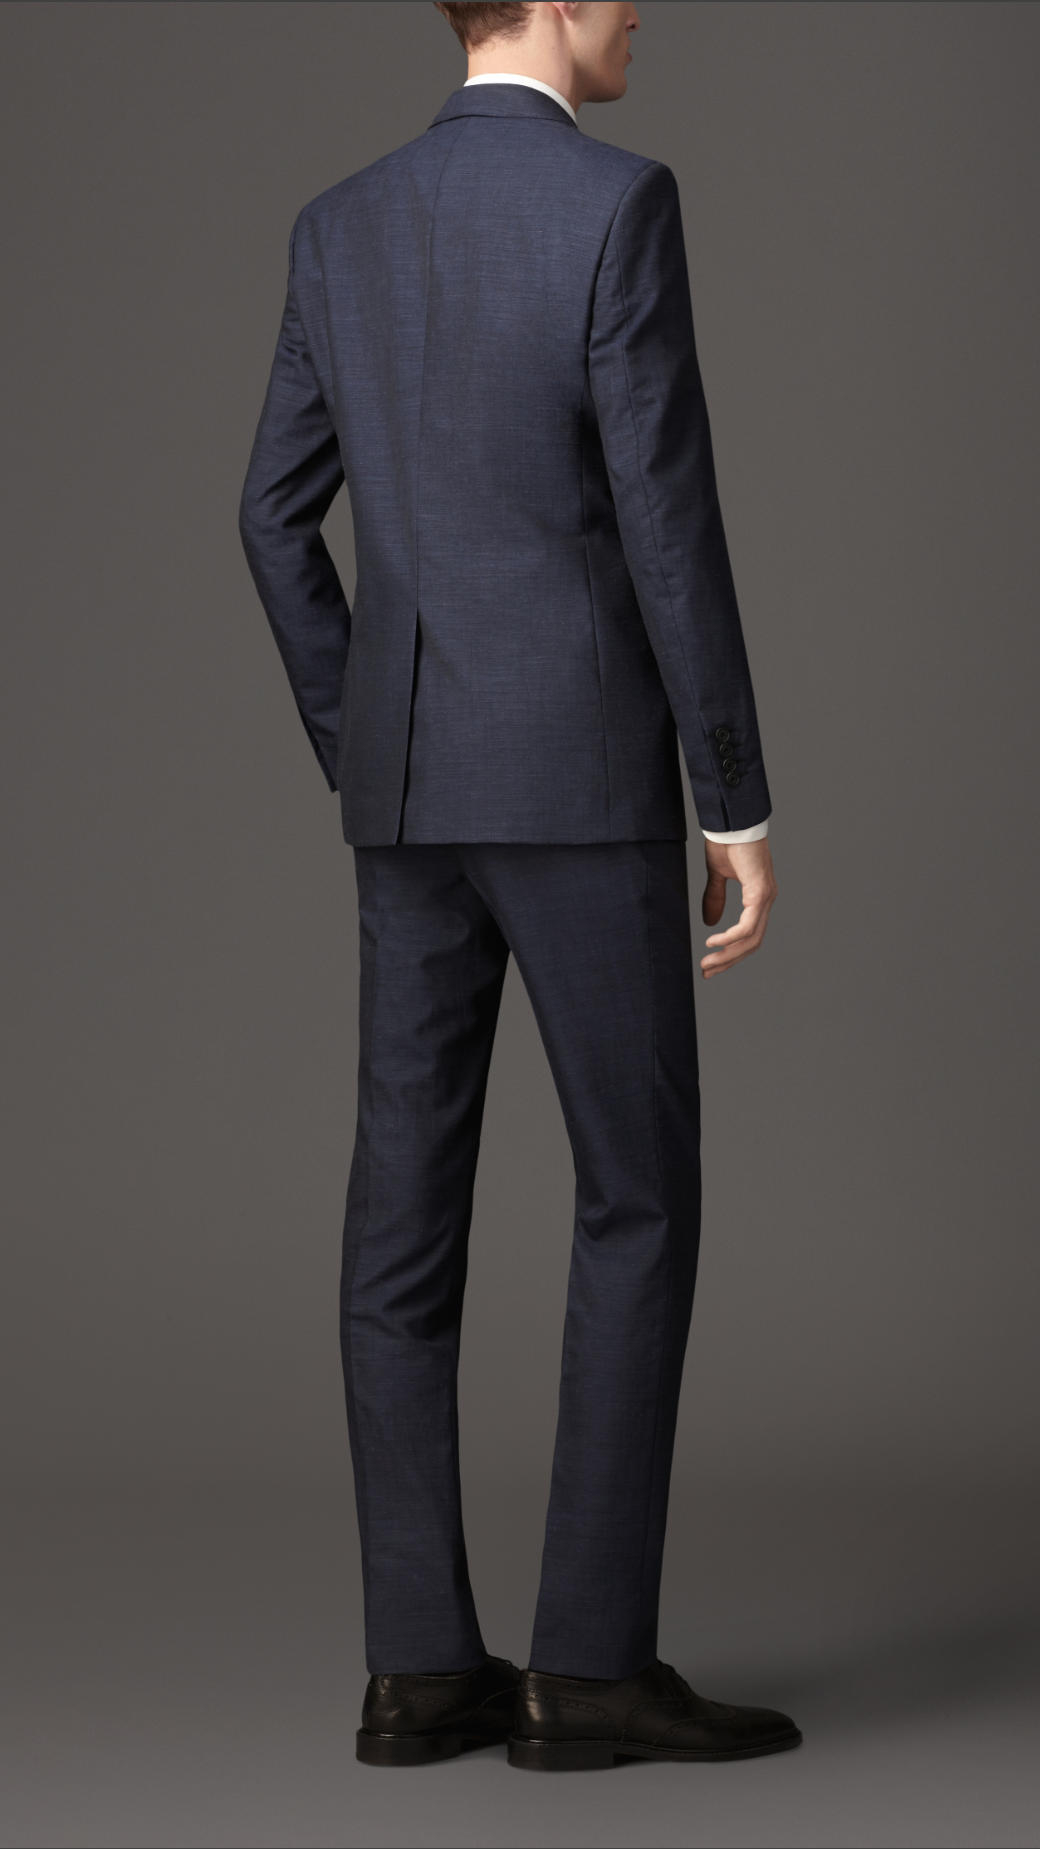 Lyst - Burberry Modern Fit Wool Linen Suit in Blue for Men